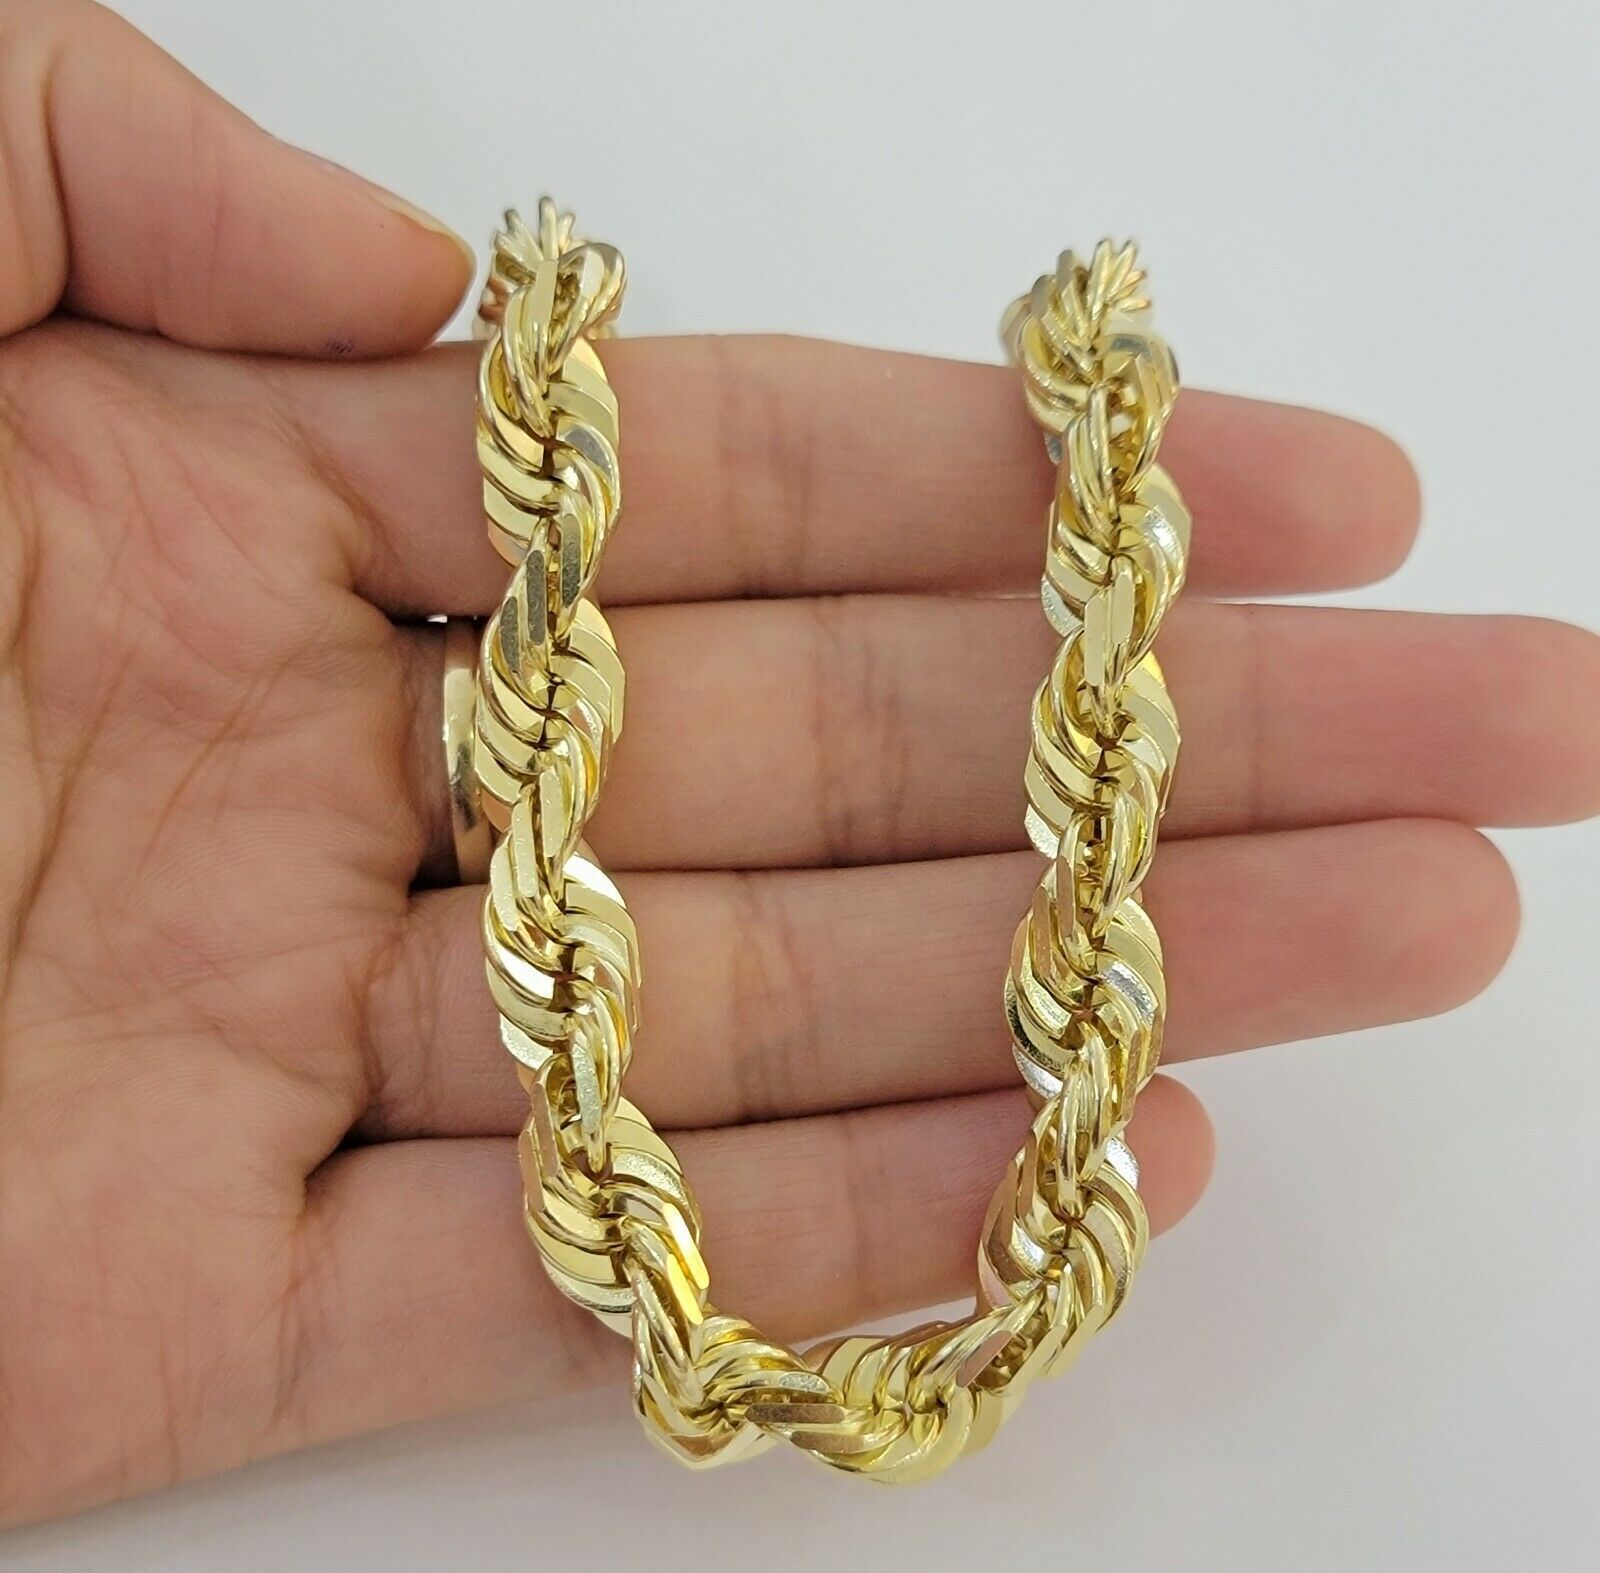 Solid 10k Yellow Gold Rope bracelet 7" 7.5" 8" 8.5" 9" Men Women 3mm- 9mm REAL